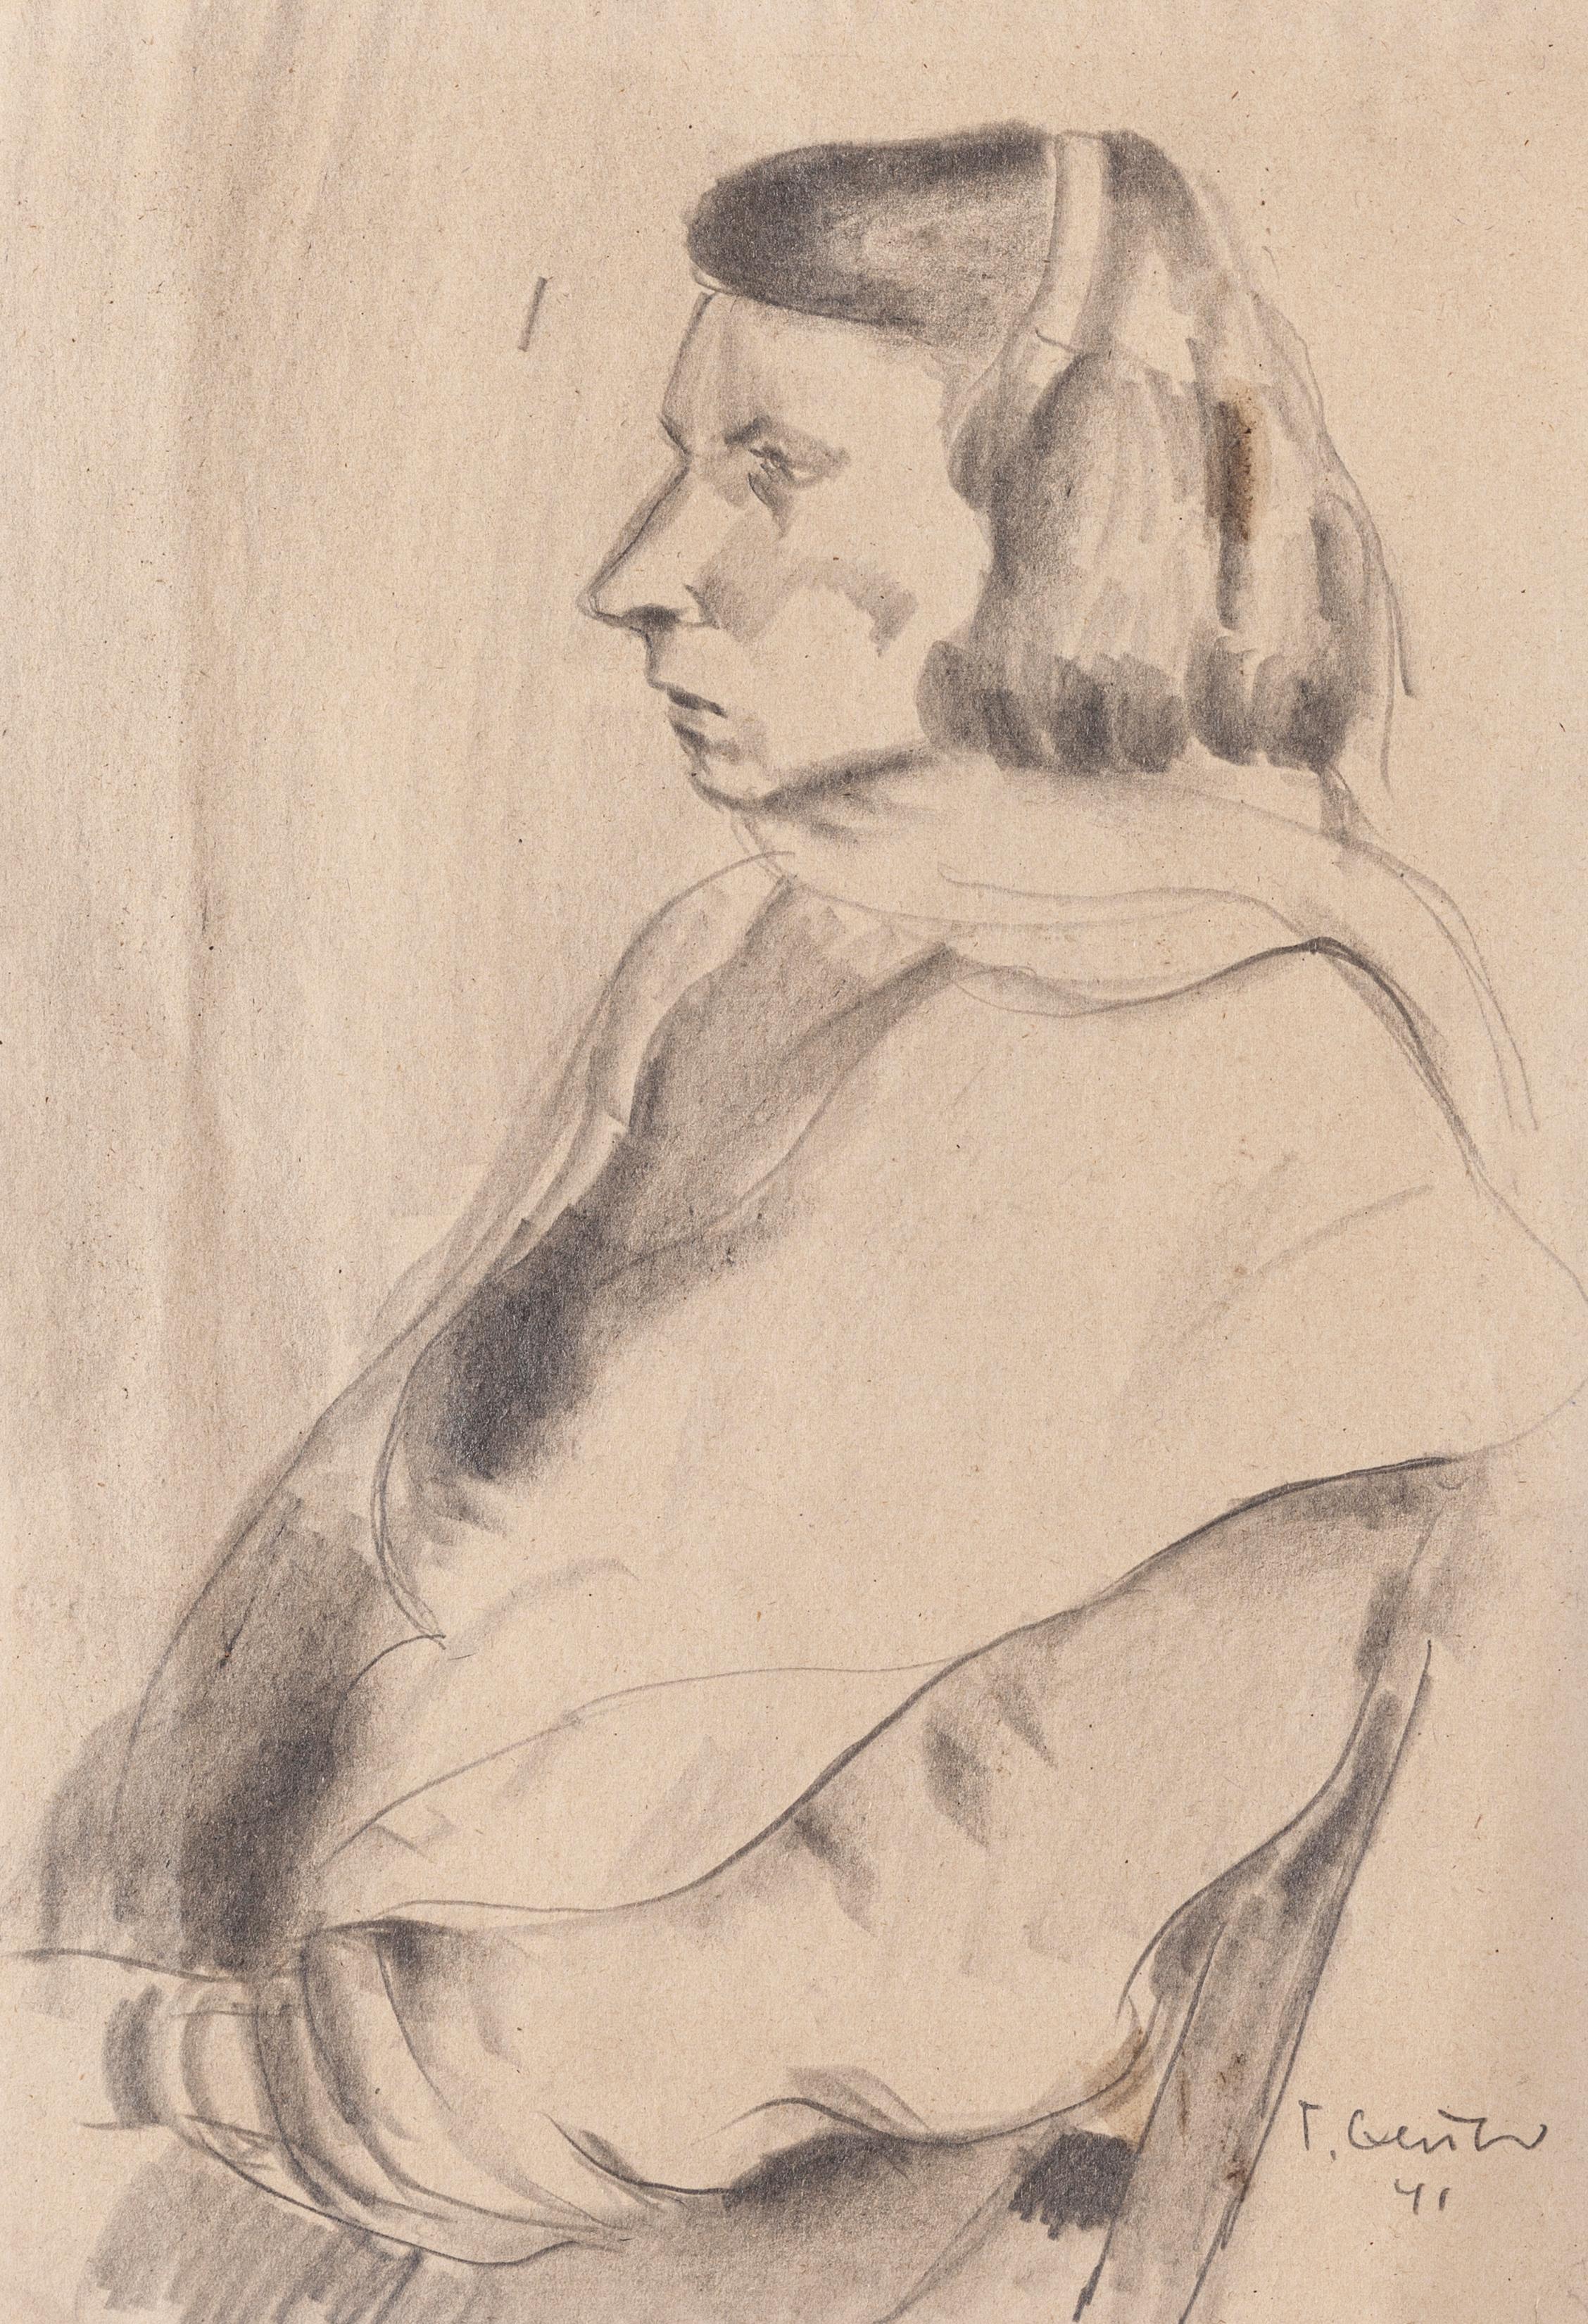 Portrait - dessin original au crayon par T. Gertner - 1941 - Art de Tibor Gertner